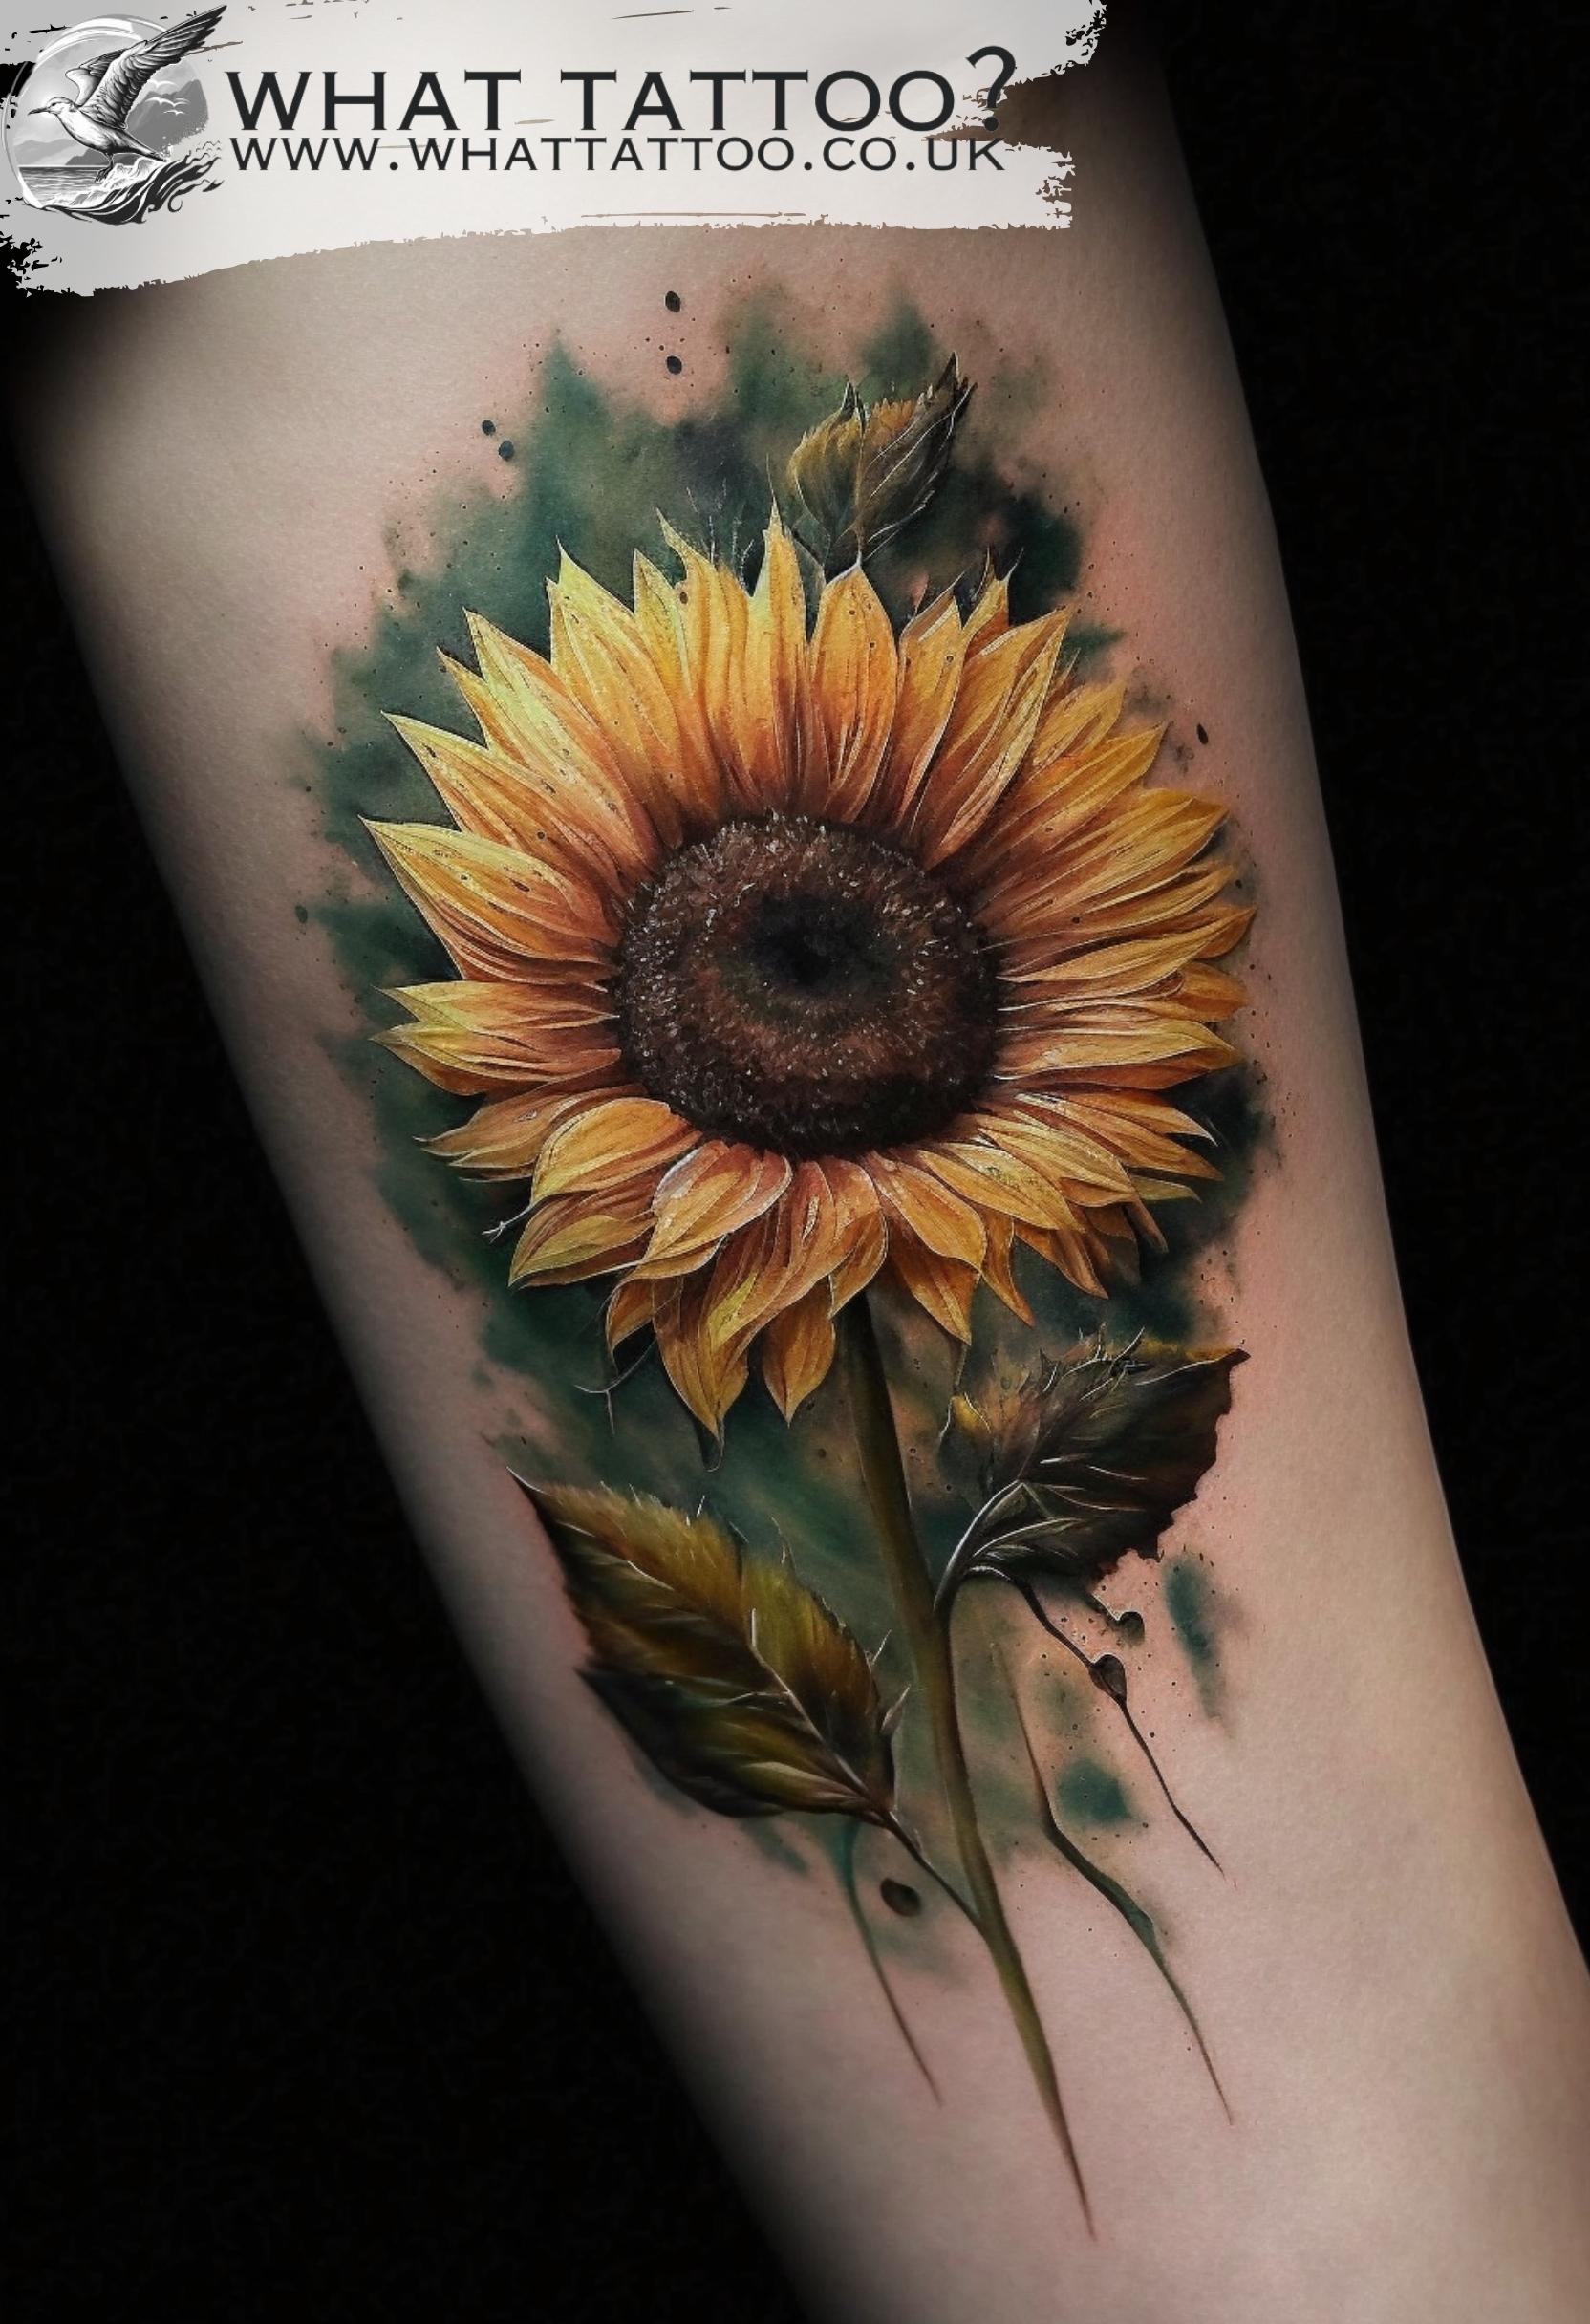 Sunflower Hand Tattoo Ideas for Women - FashionActivation